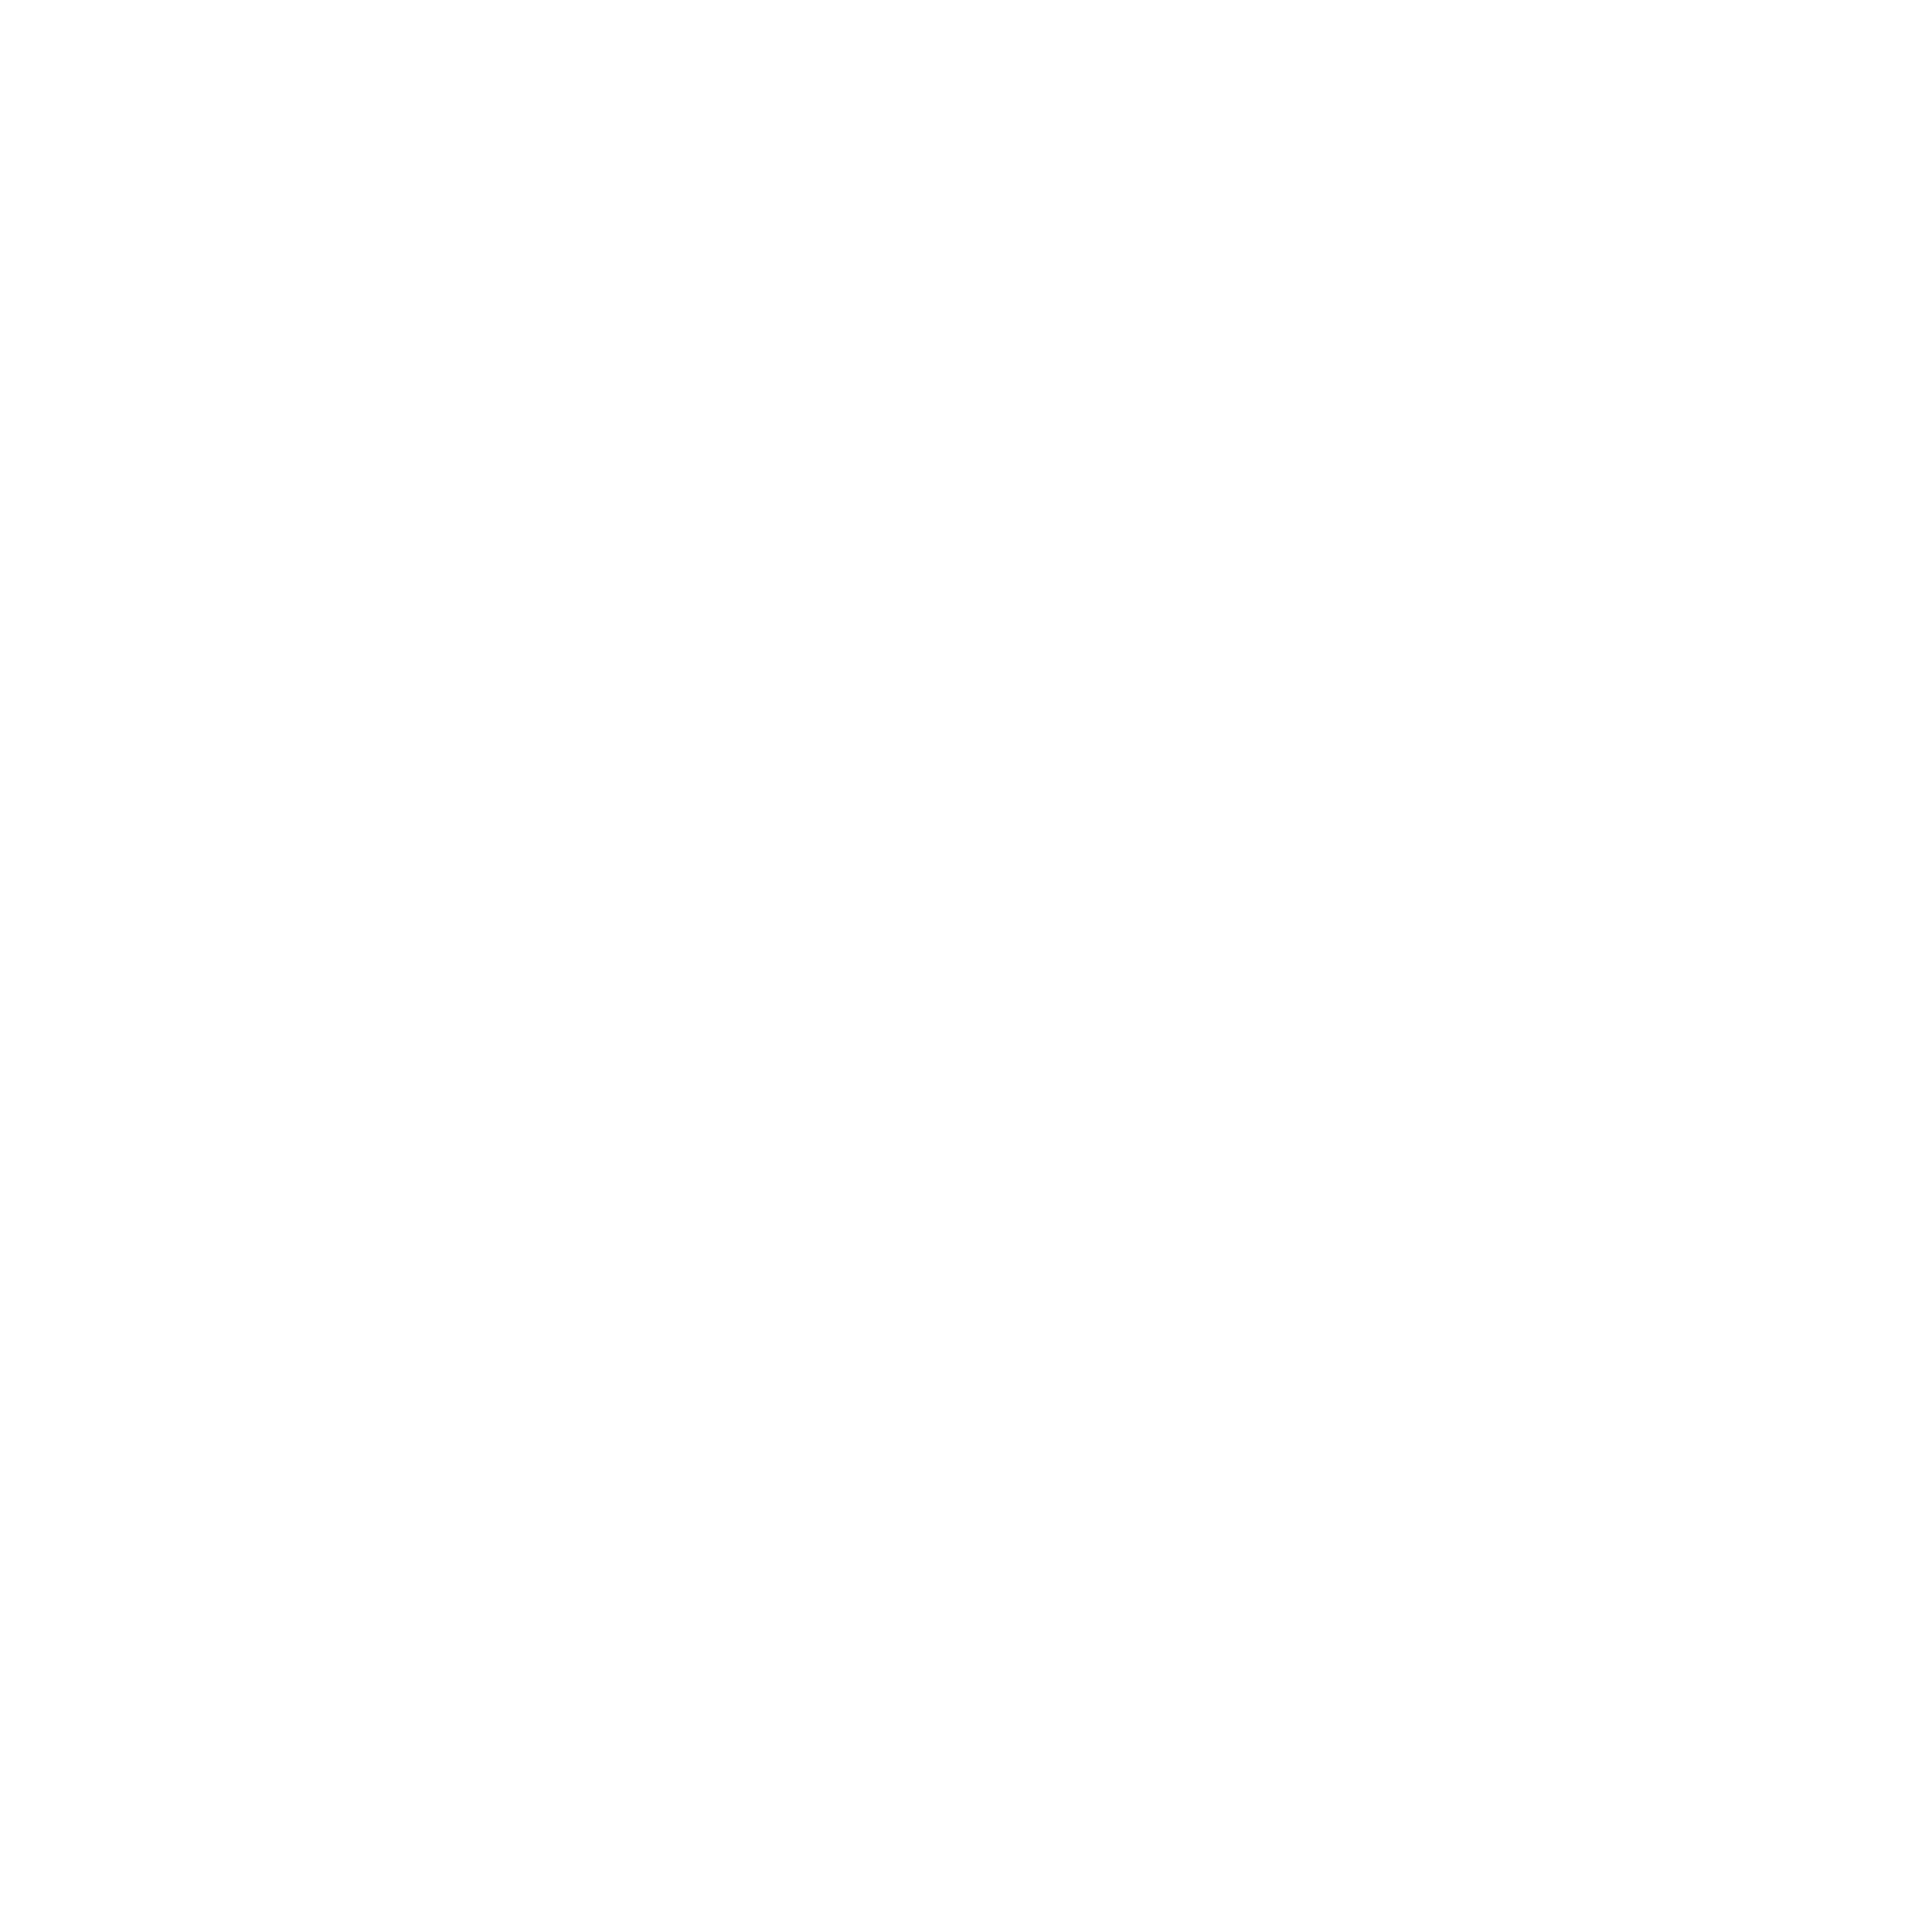 Great National Hotels logo